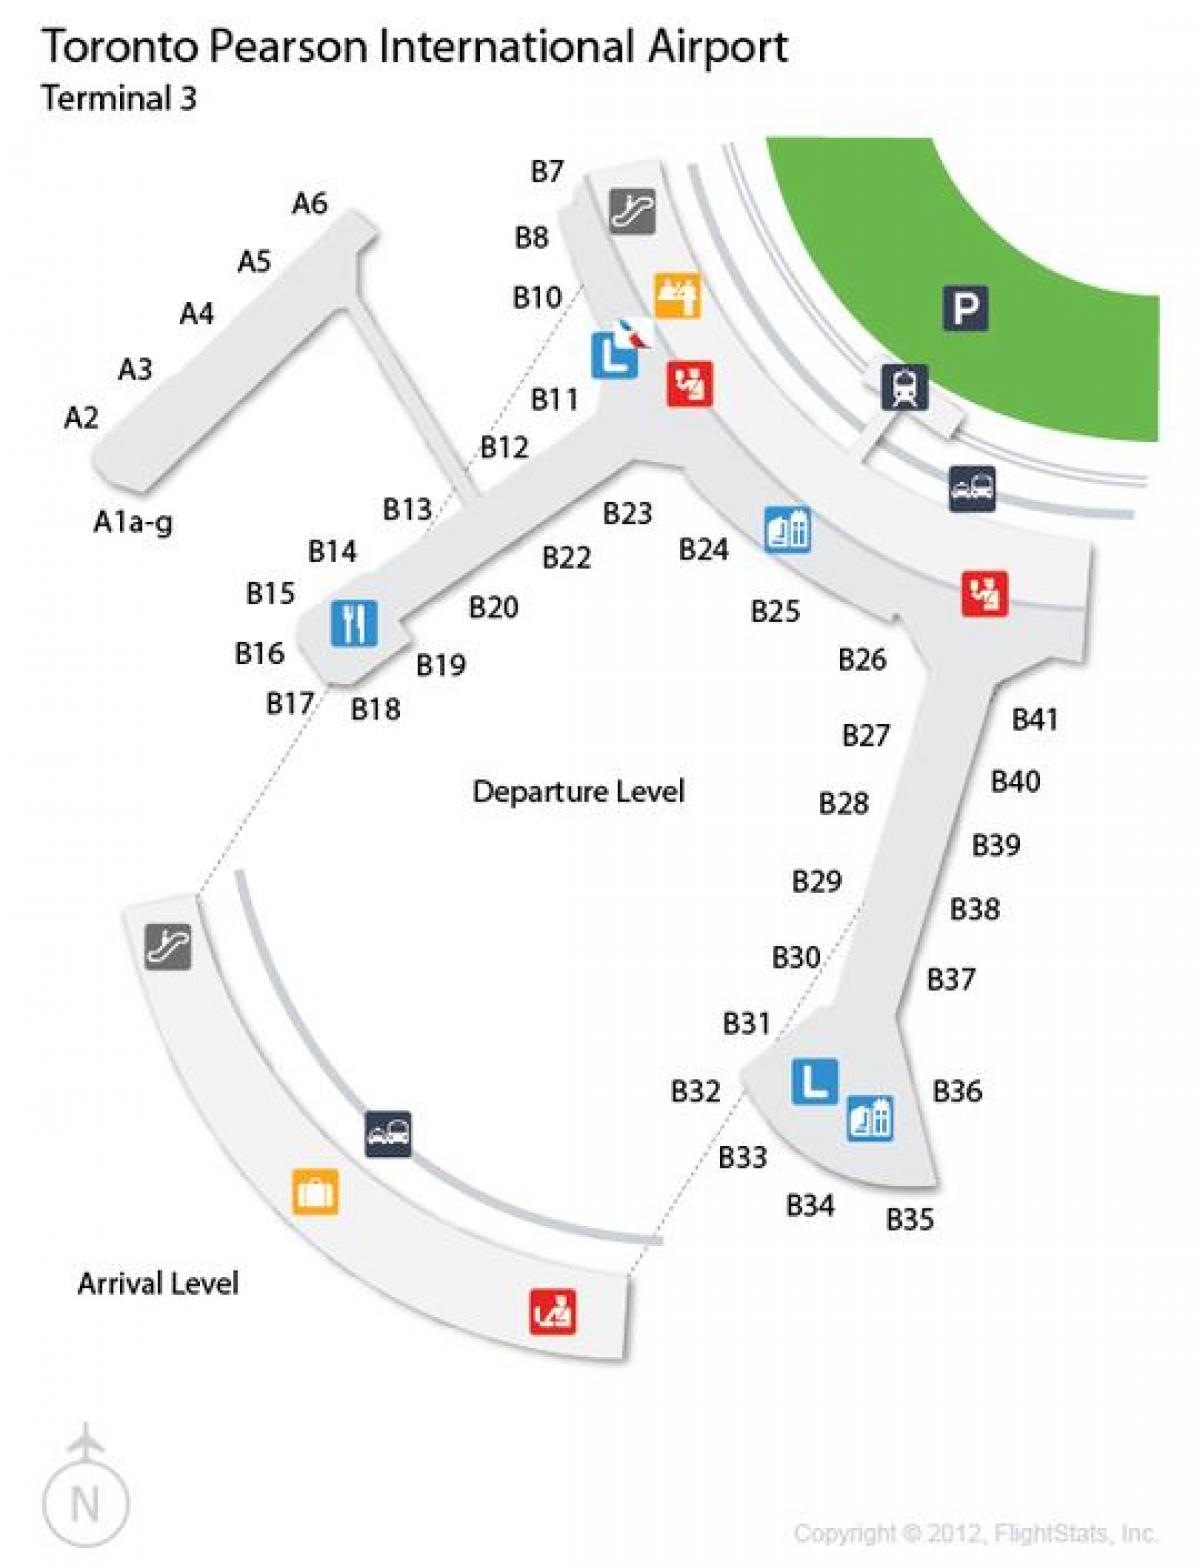 Peta dari Toronto Pearson International airport terminal 3